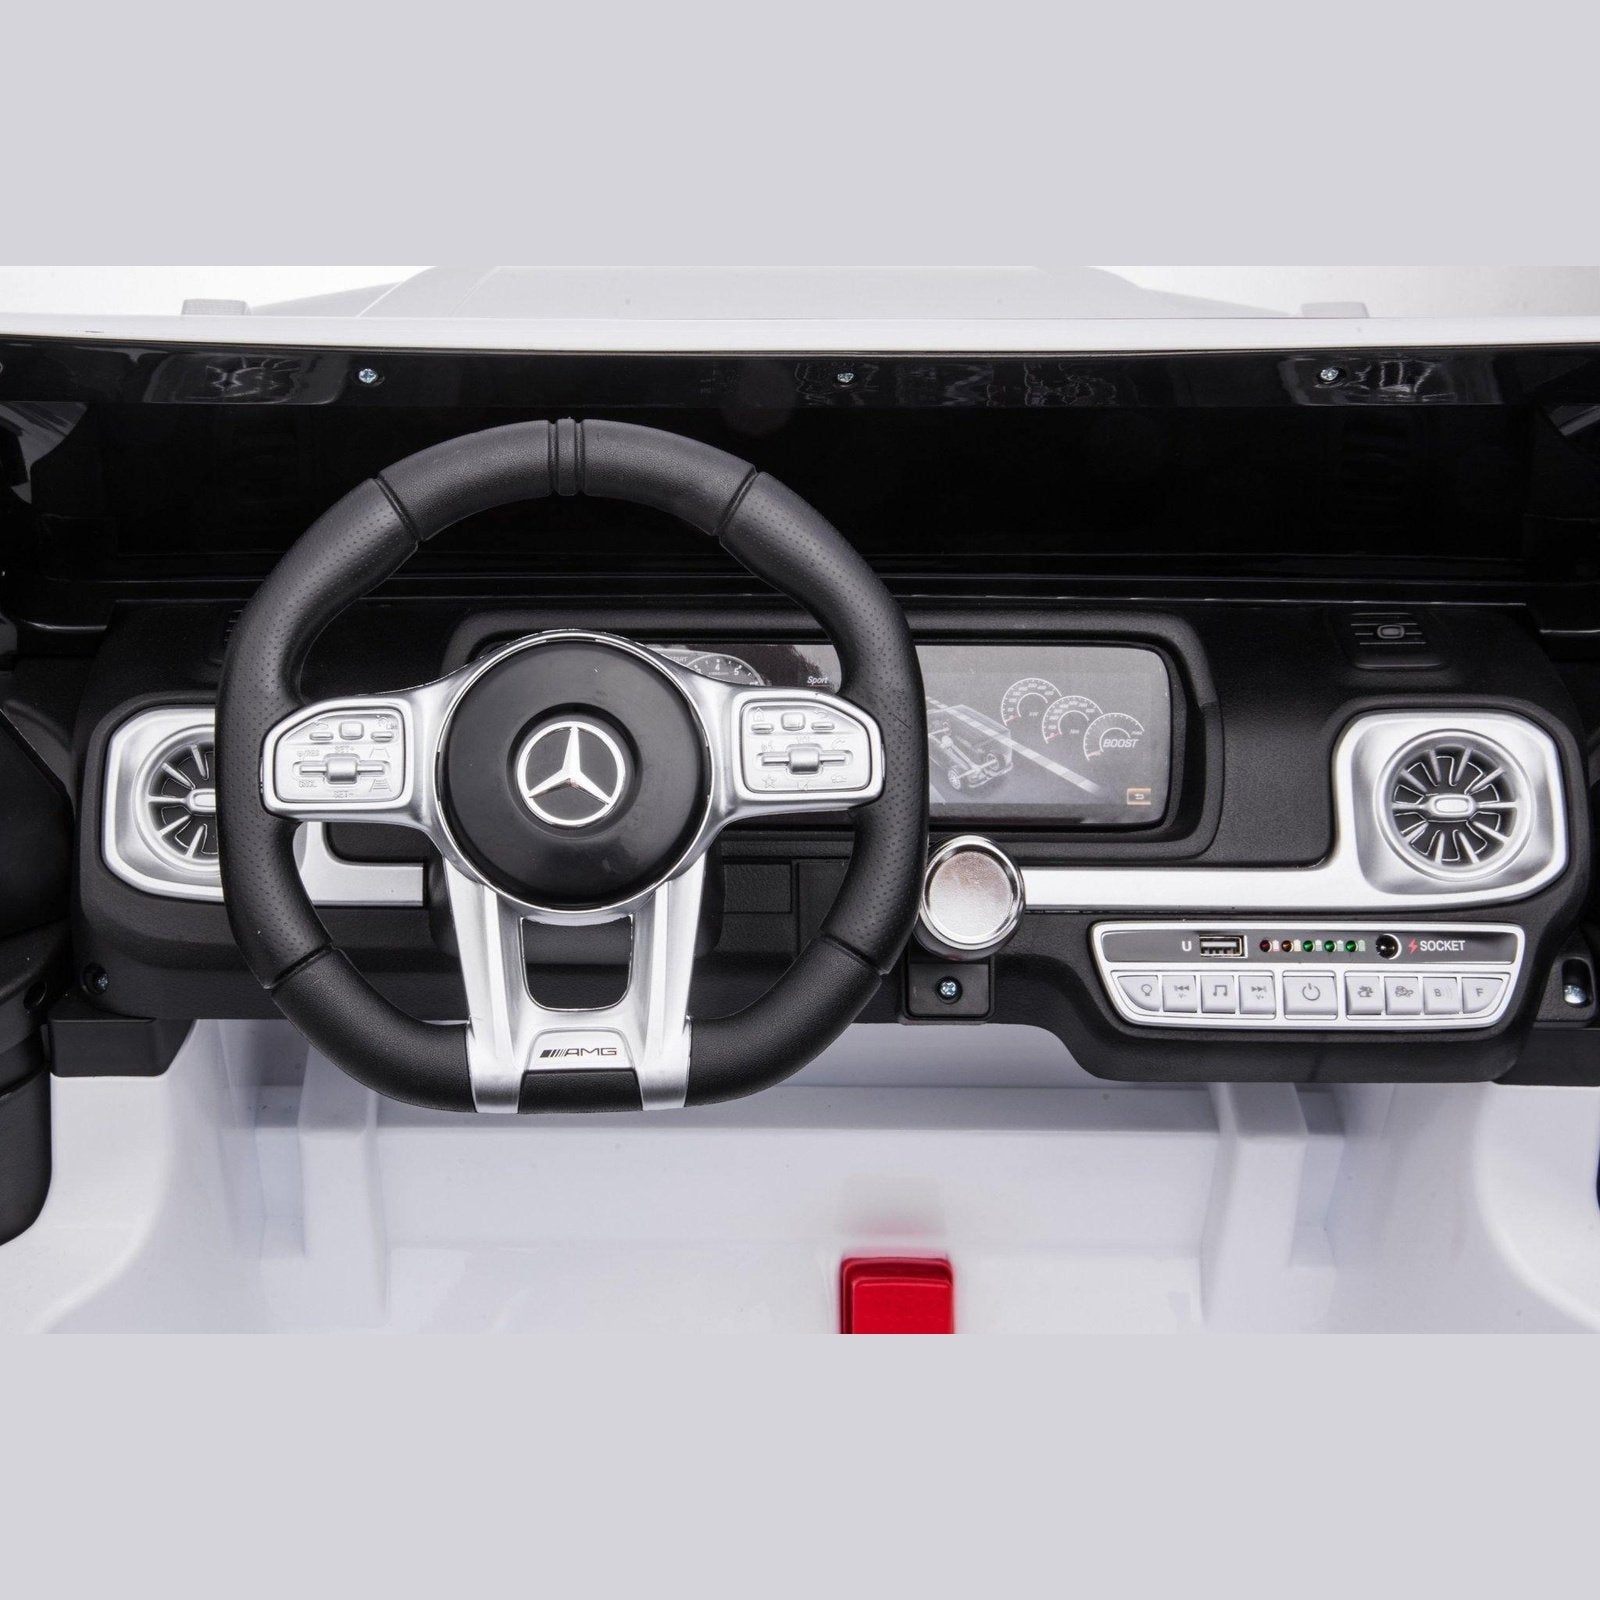 Freddo 24V 4x4 Mercedes G63 AMG 2 Seater Ride on Car SpadezStore